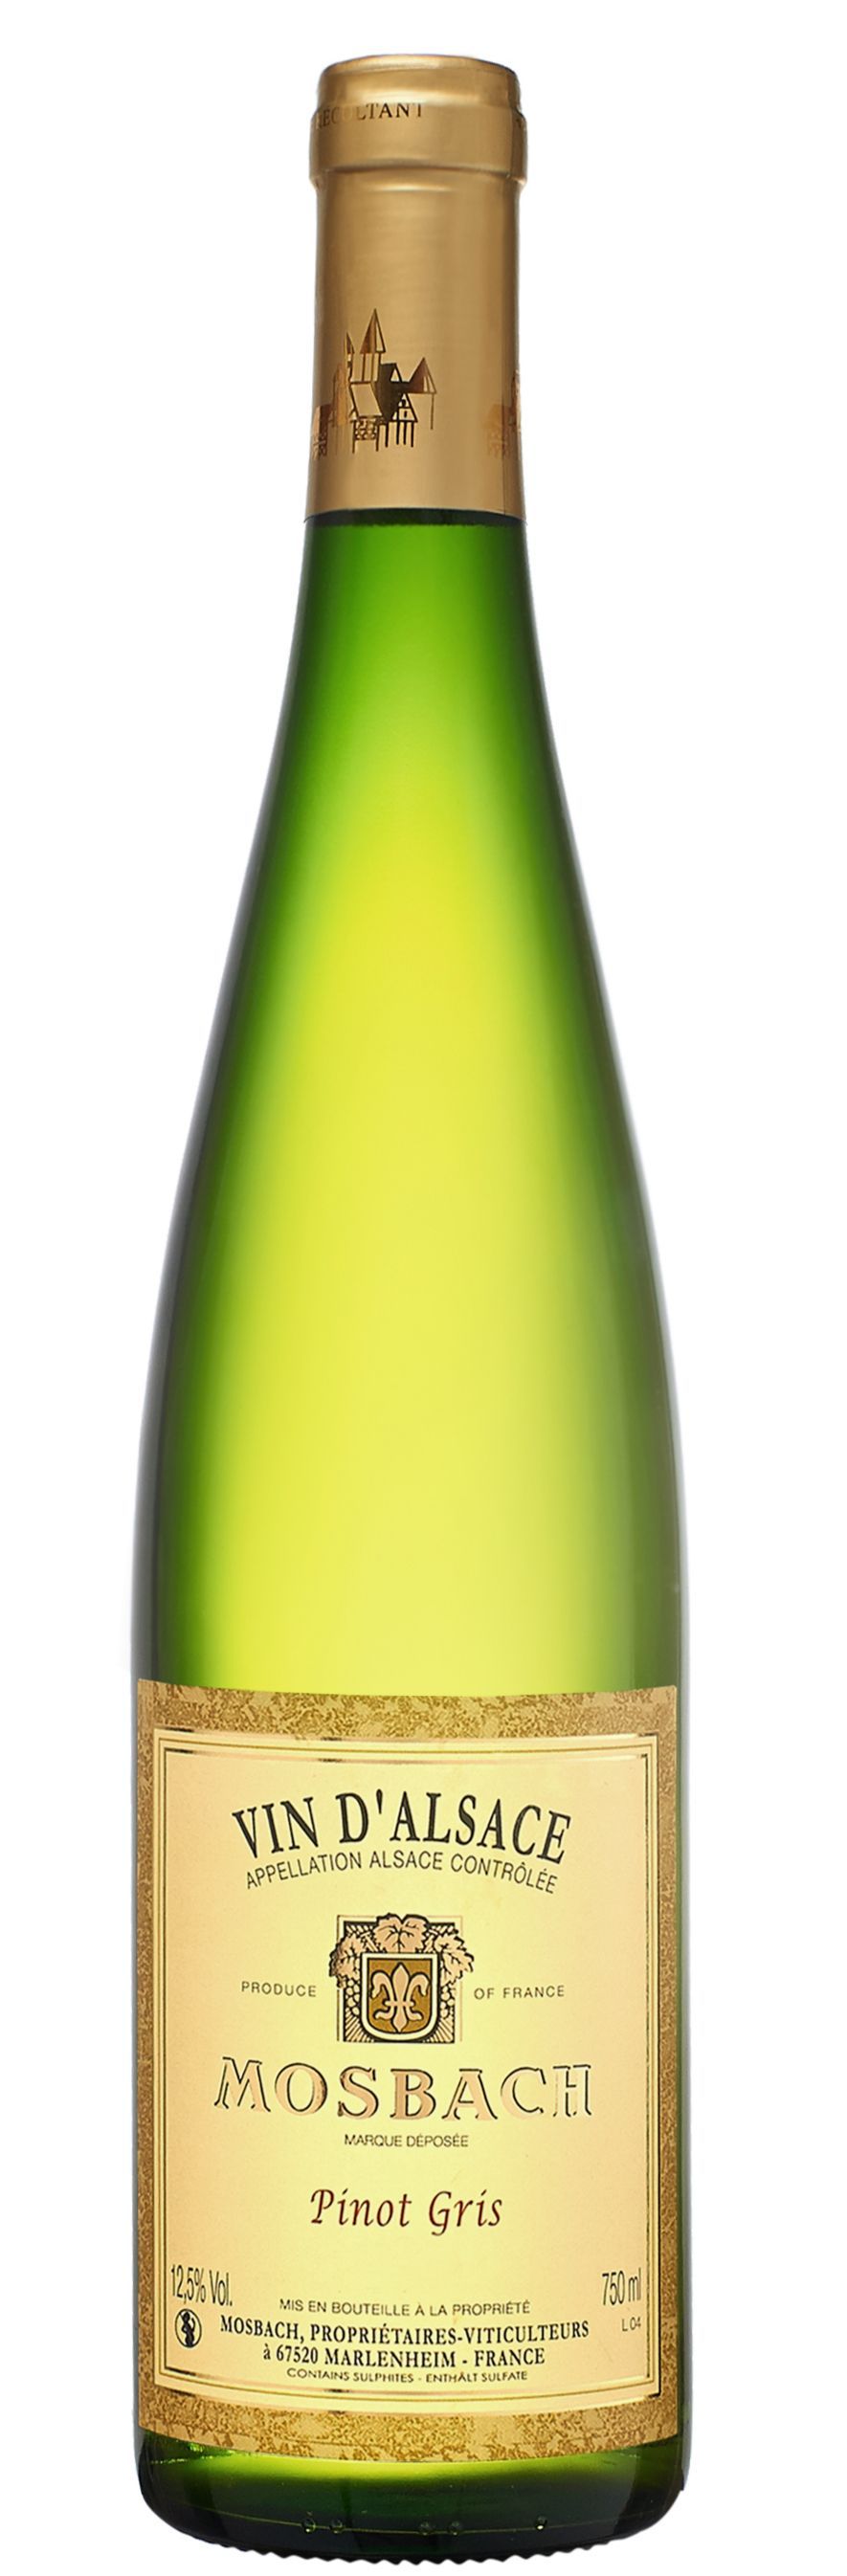 GFA MOSBACH (MARLENHEIM) Pinot Gris Mosbach, Blanc, 2020, Alsace ou Vin d'Alsace. Bottle image